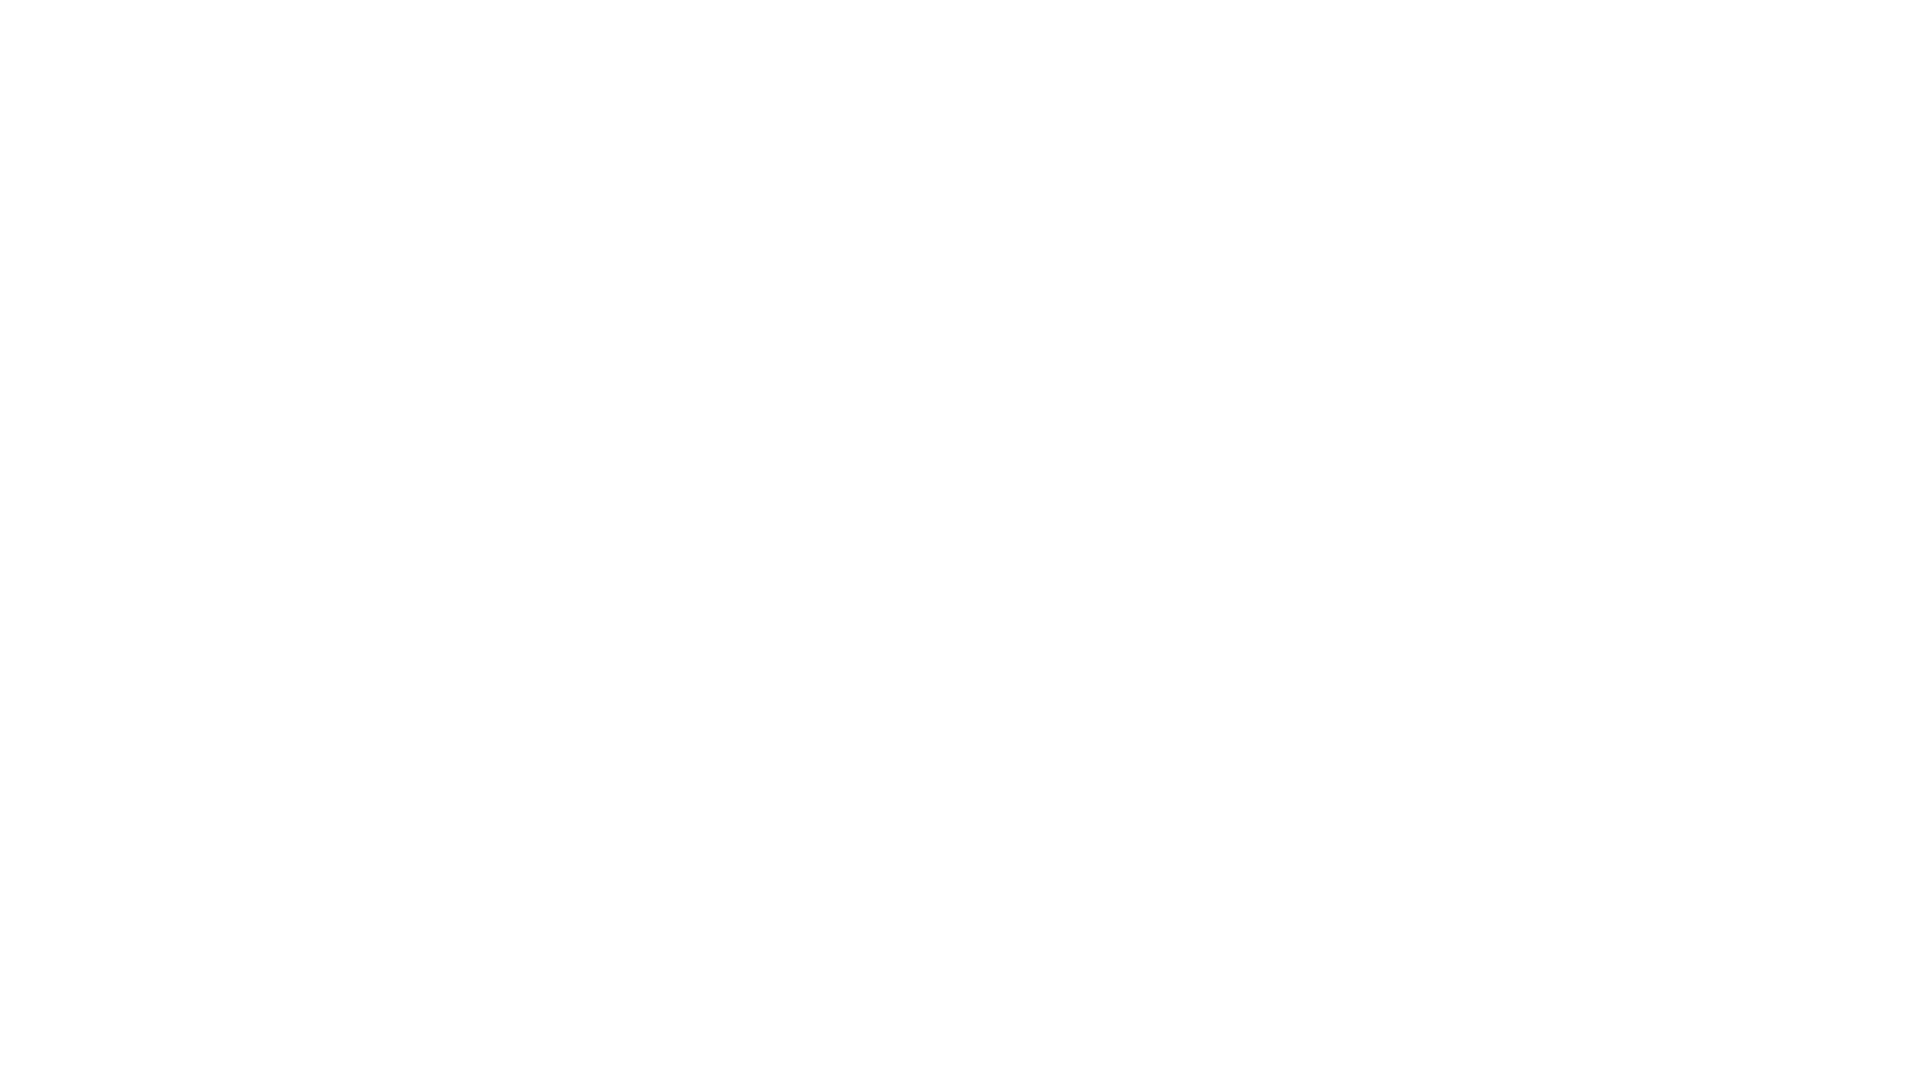 Inbix